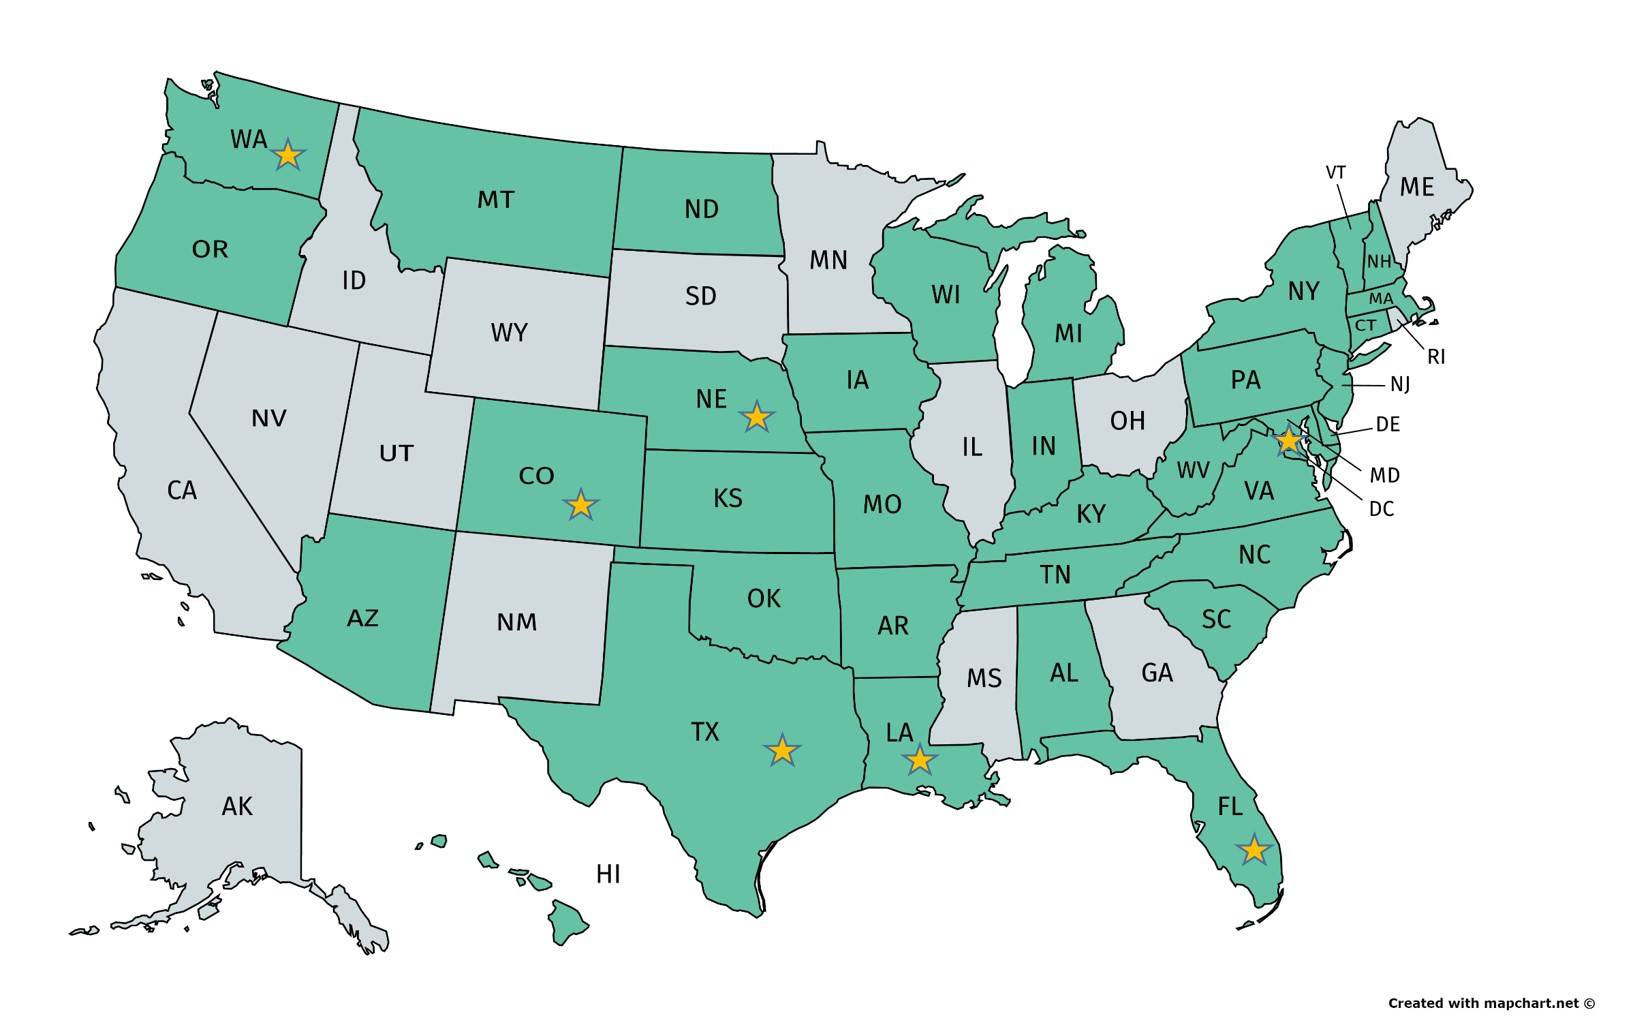 35-state-tta-map